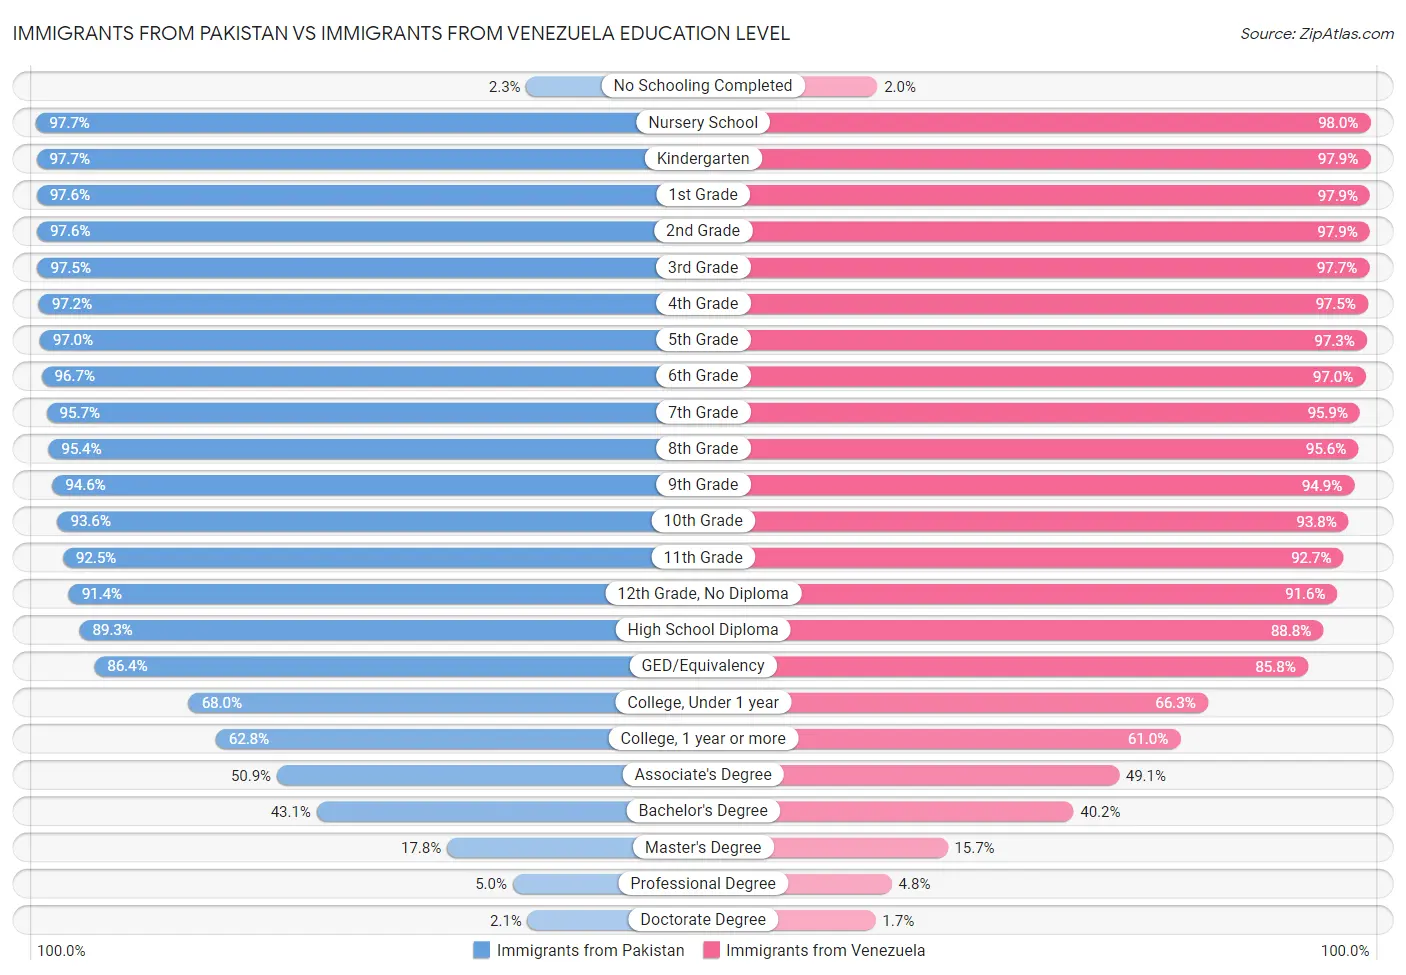 Immigrants from Pakistan vs Immigrants from Venezuela Education Level